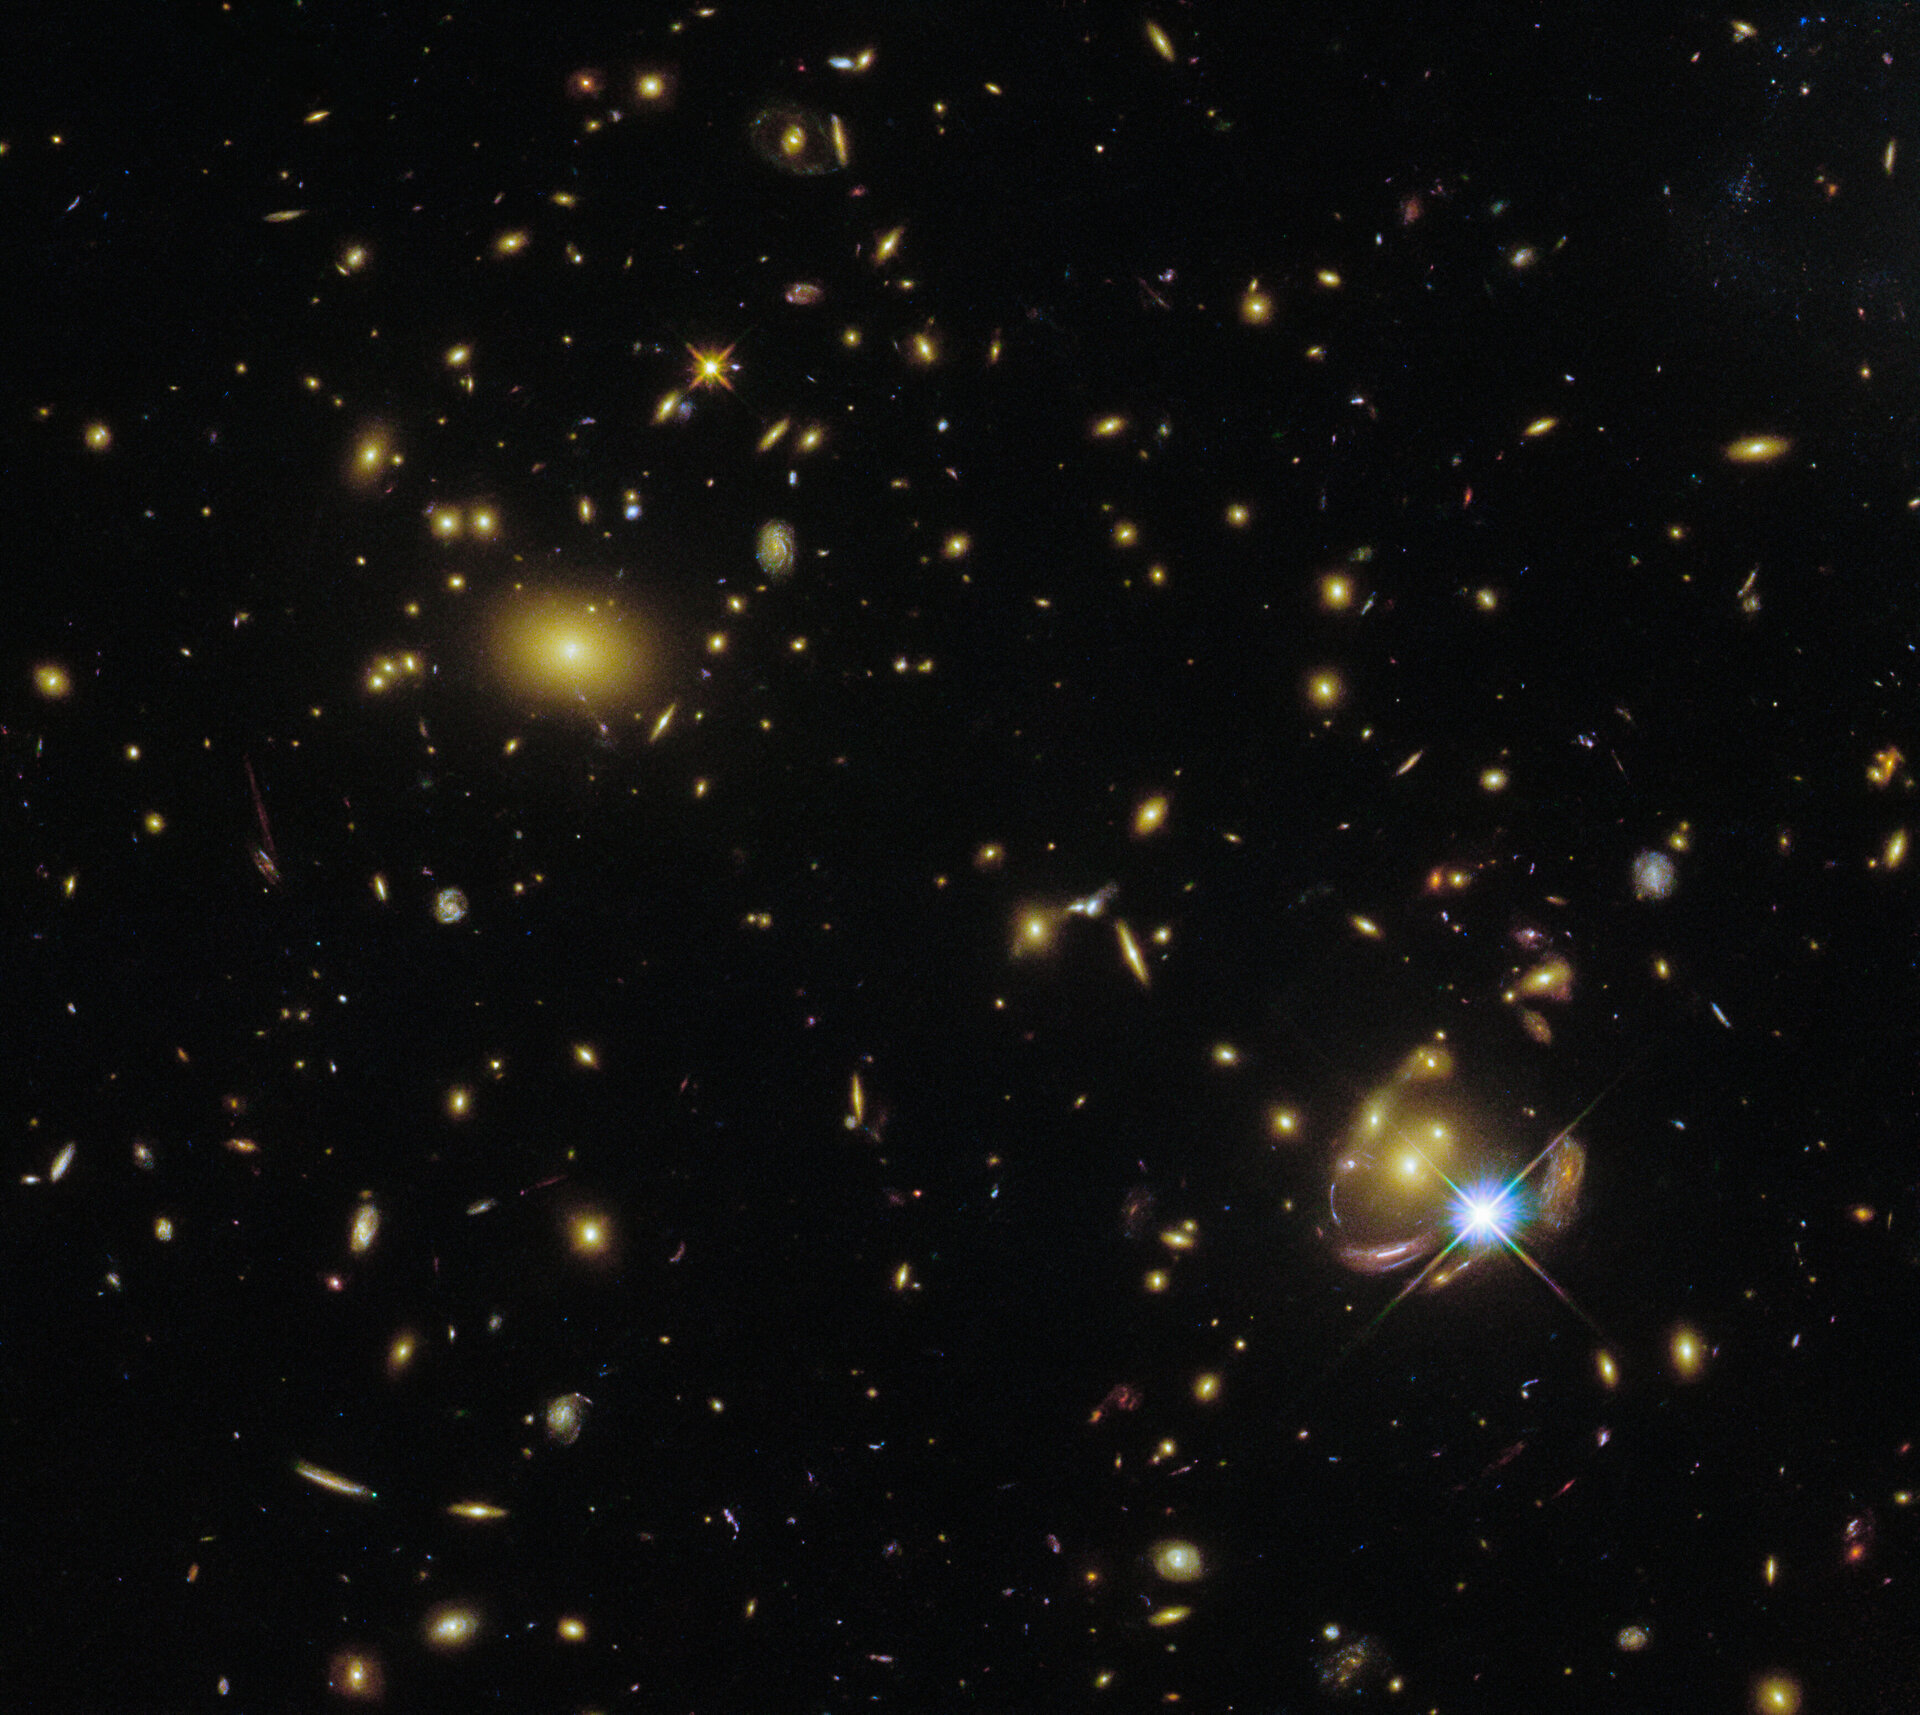 A Gravitational Lens Shows the Same Galaxy Three Times